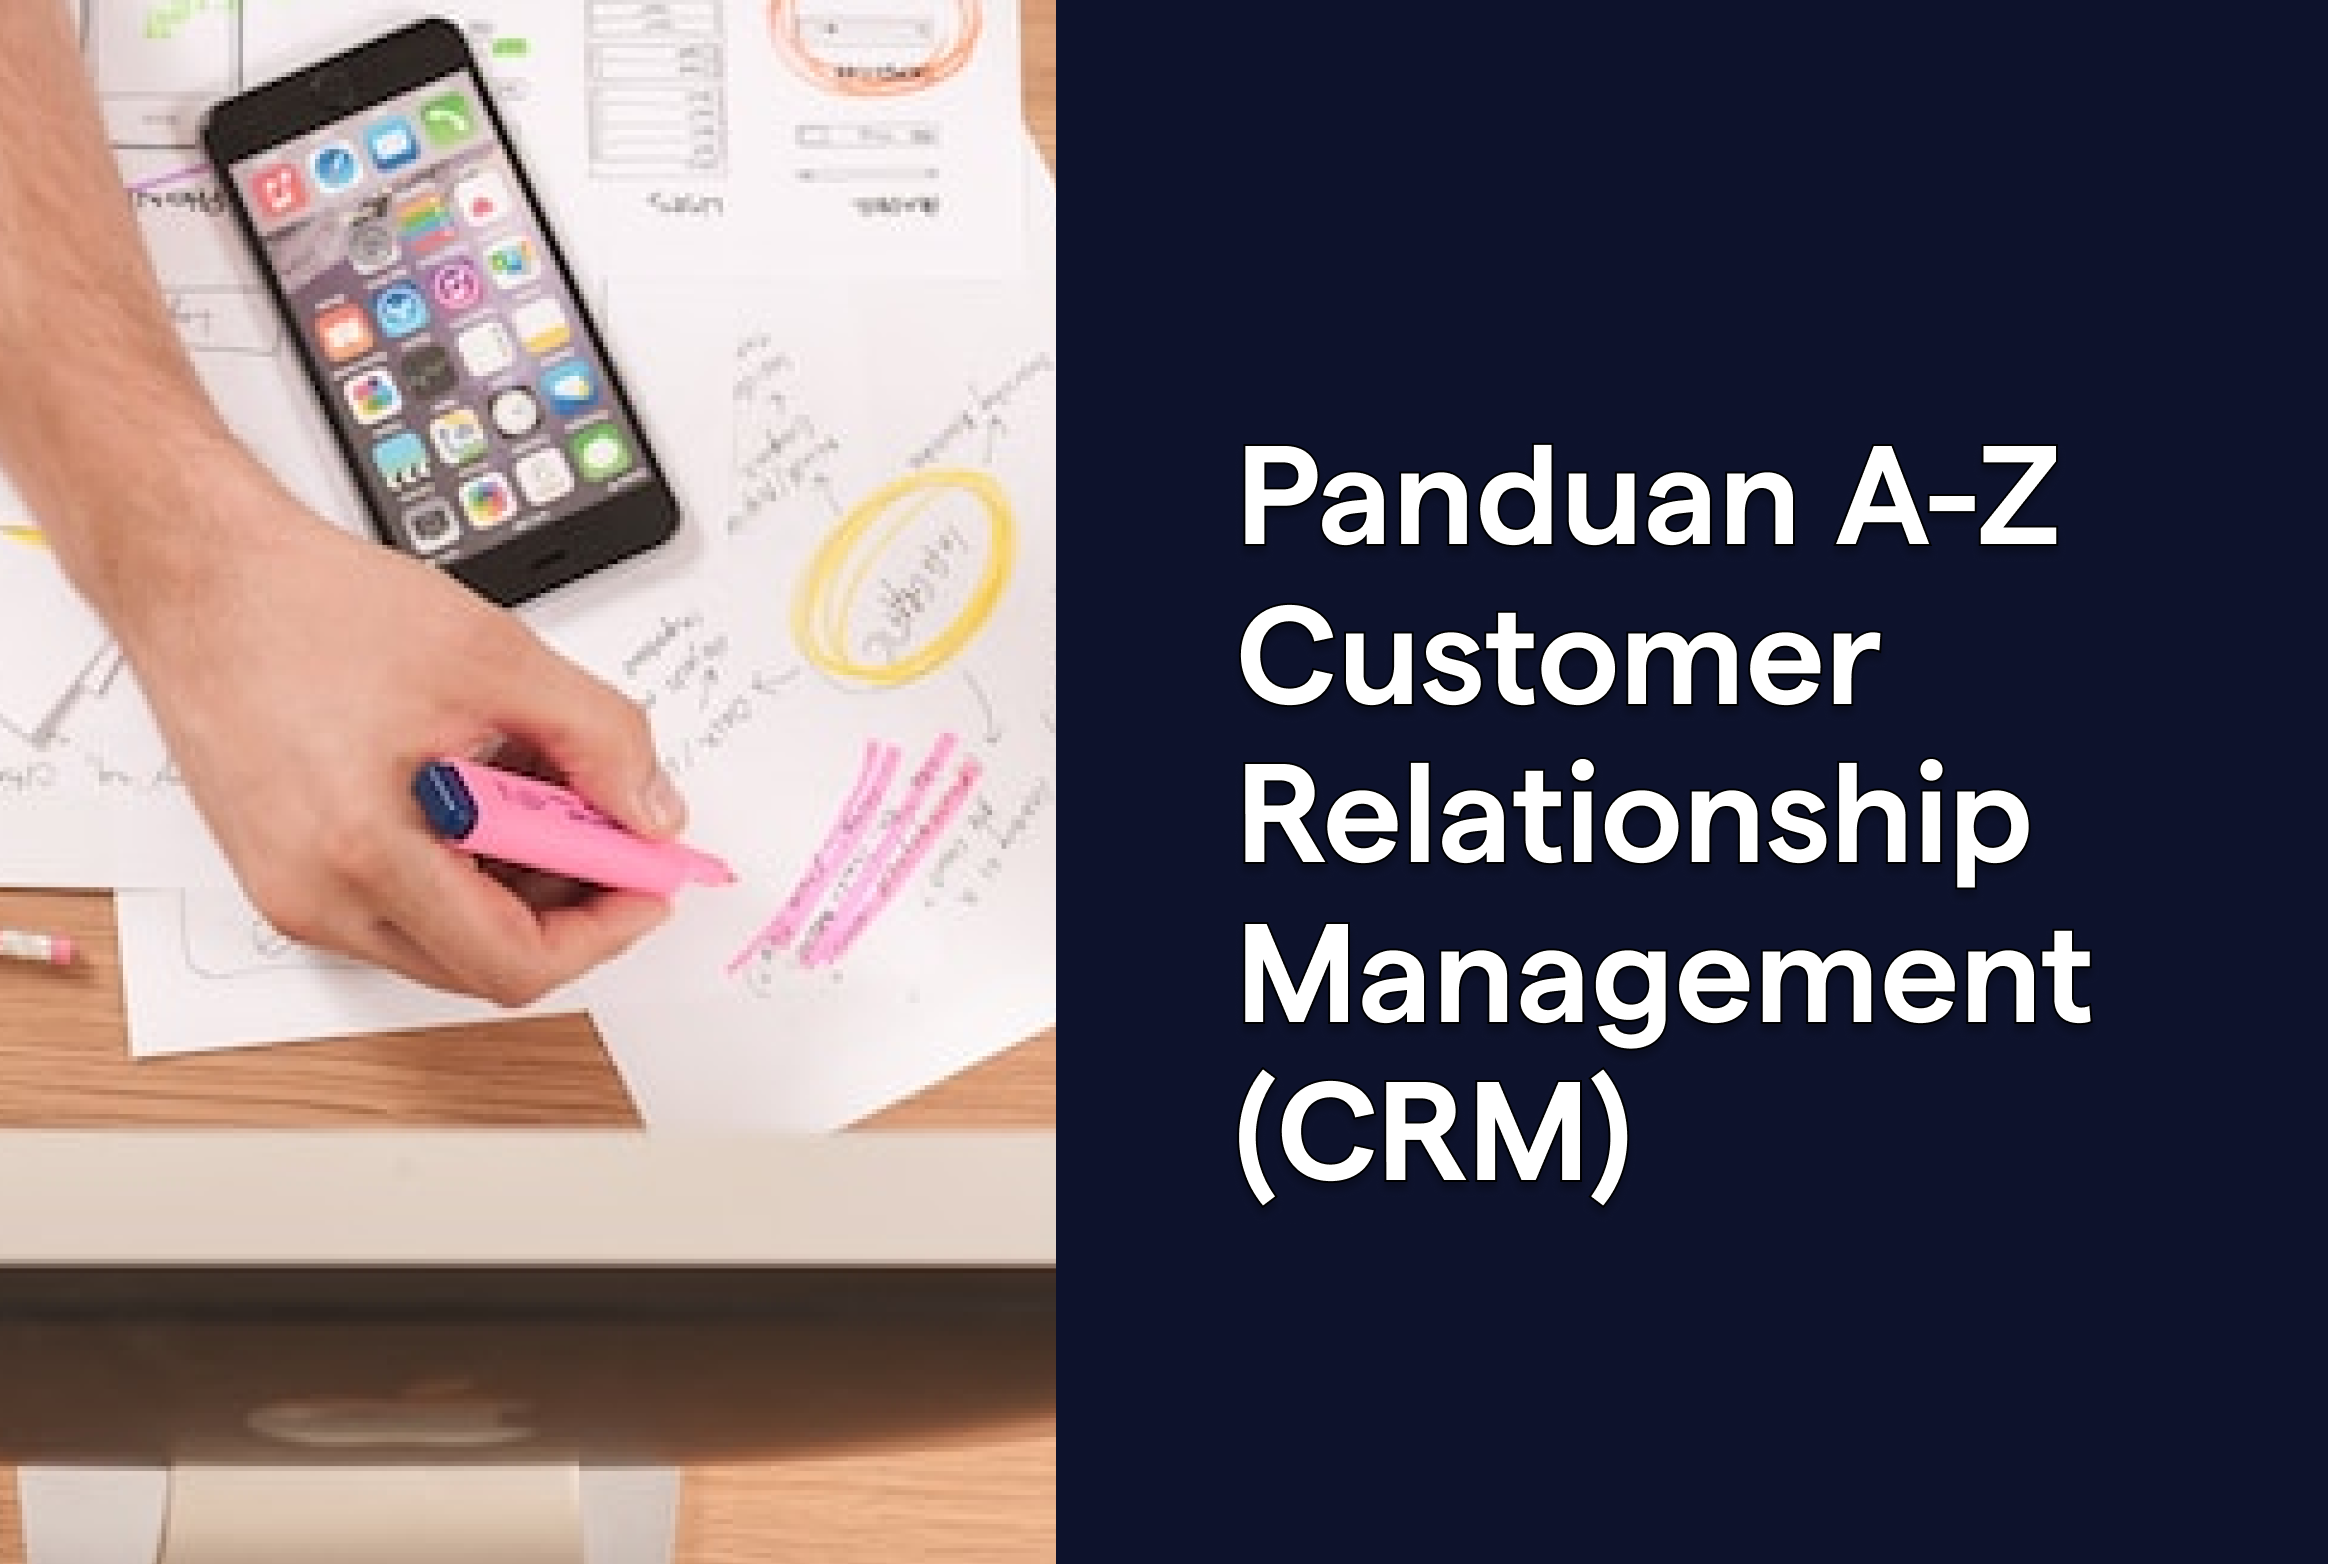 Panduan A-Z Customer Relationship Management (CRM)